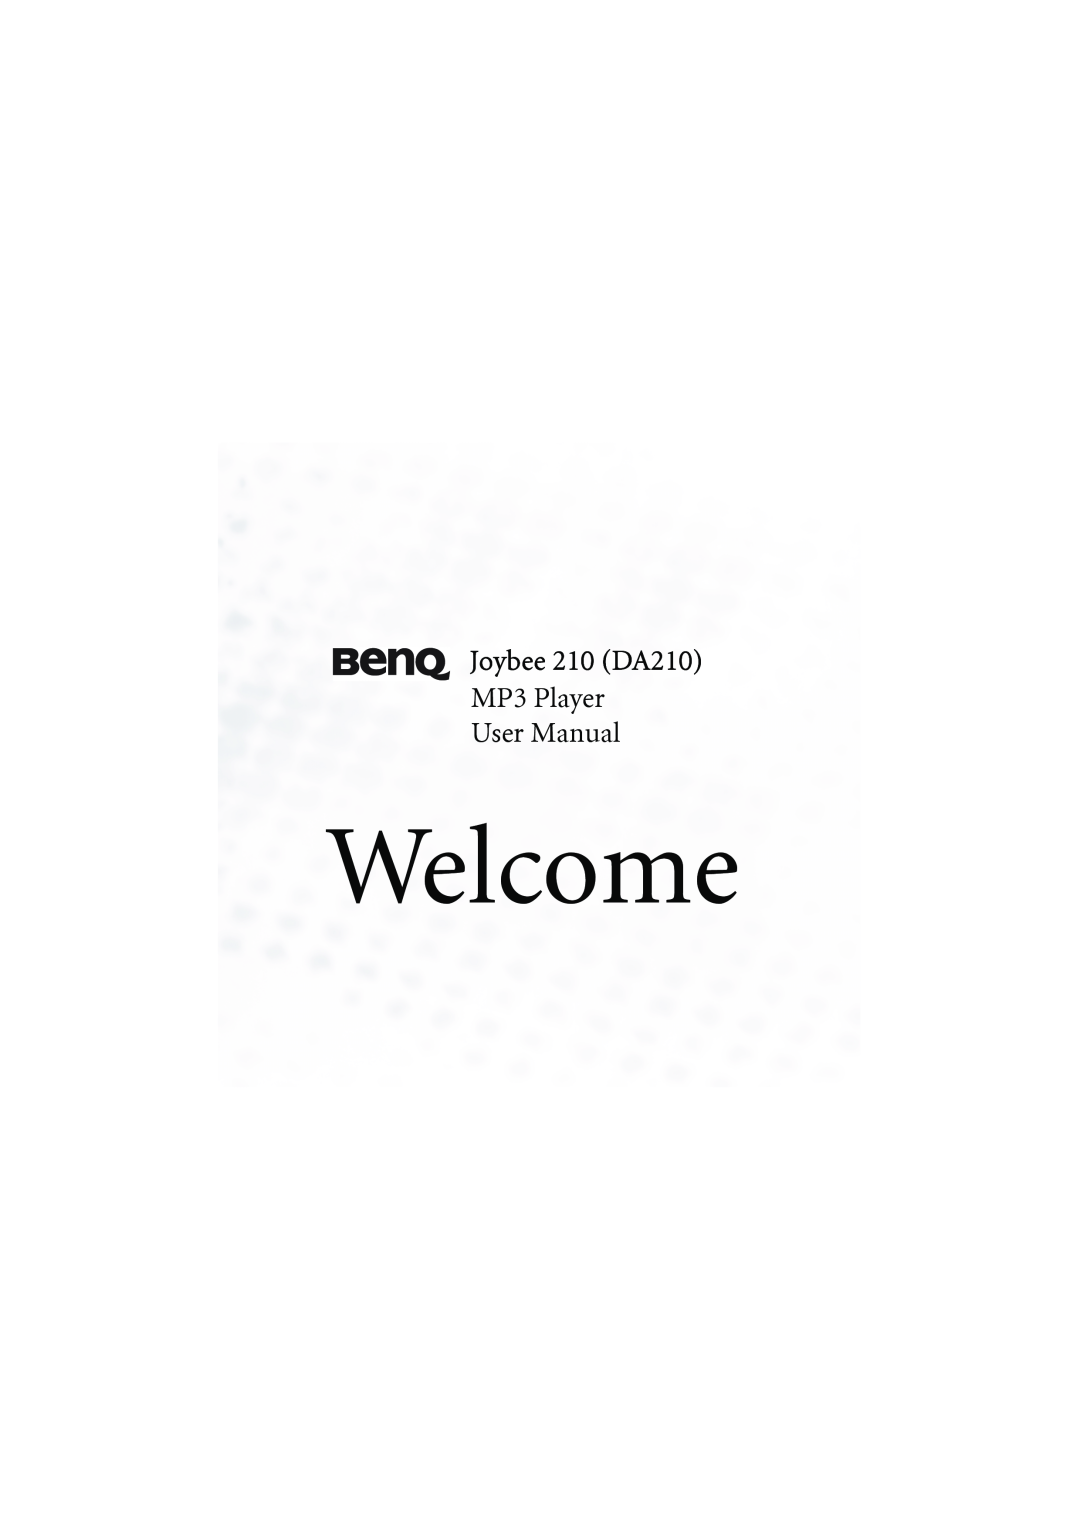 BenQ user manual Welcome, Joybee 210 DA210, MP3 Player User Manual 